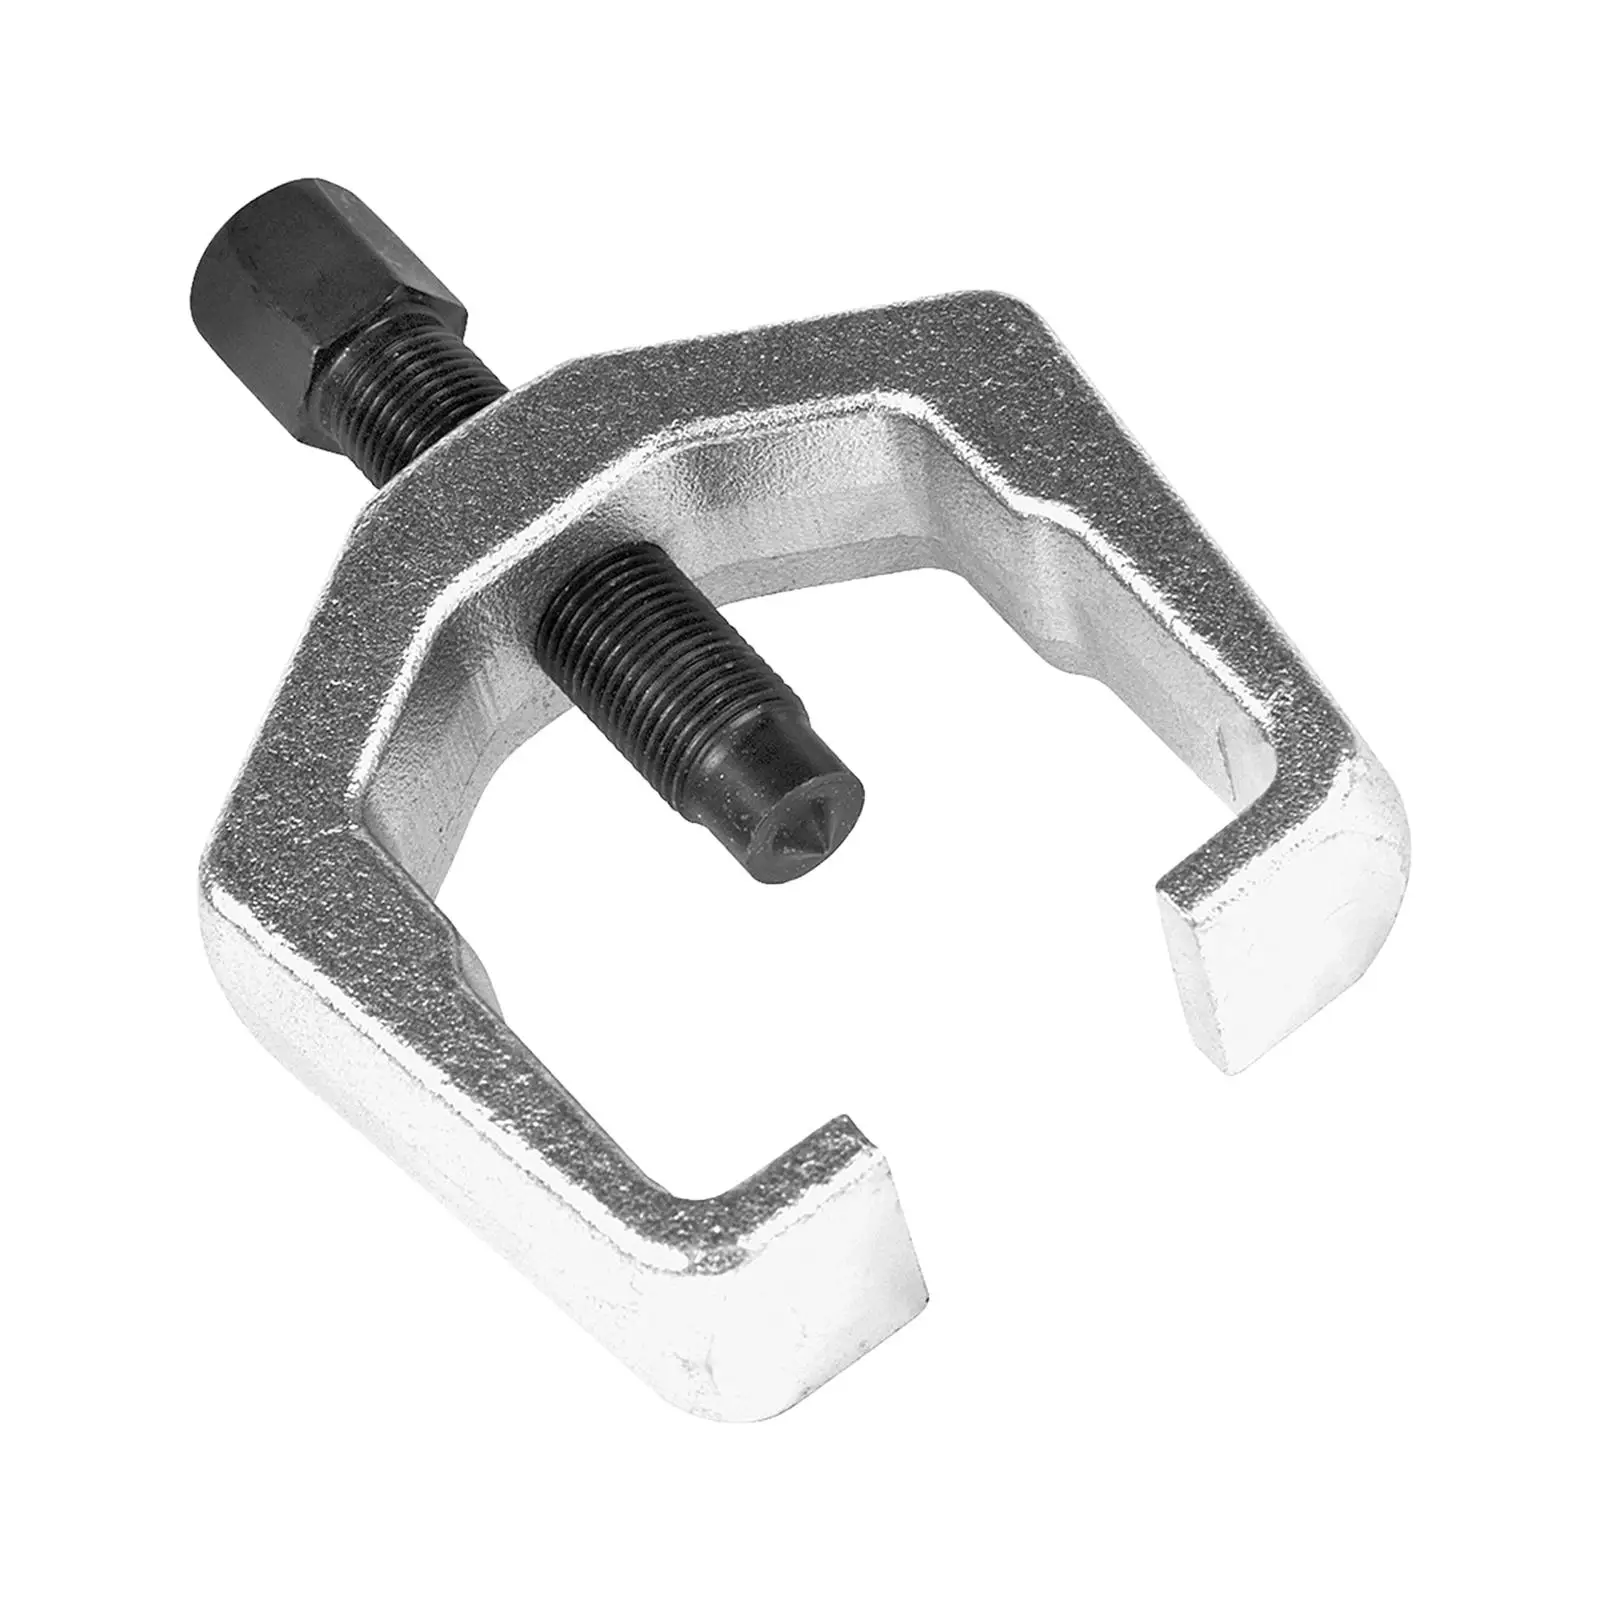 Slack Adjuster Puller Repair Tool Removal Tool for Gears Trucks Remover Tool